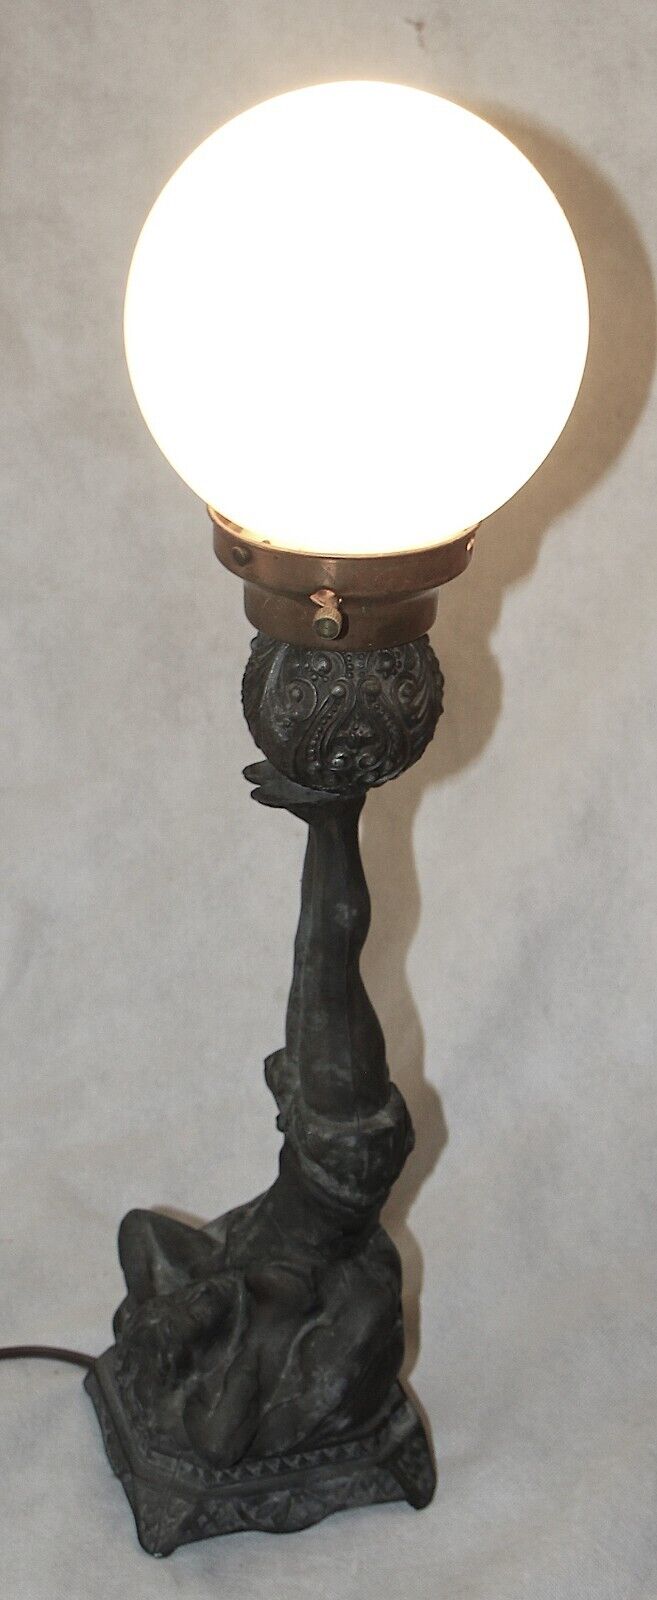 Antique Art Deco Figural Reclining Woman Lamp w Glass Globe - Works Great